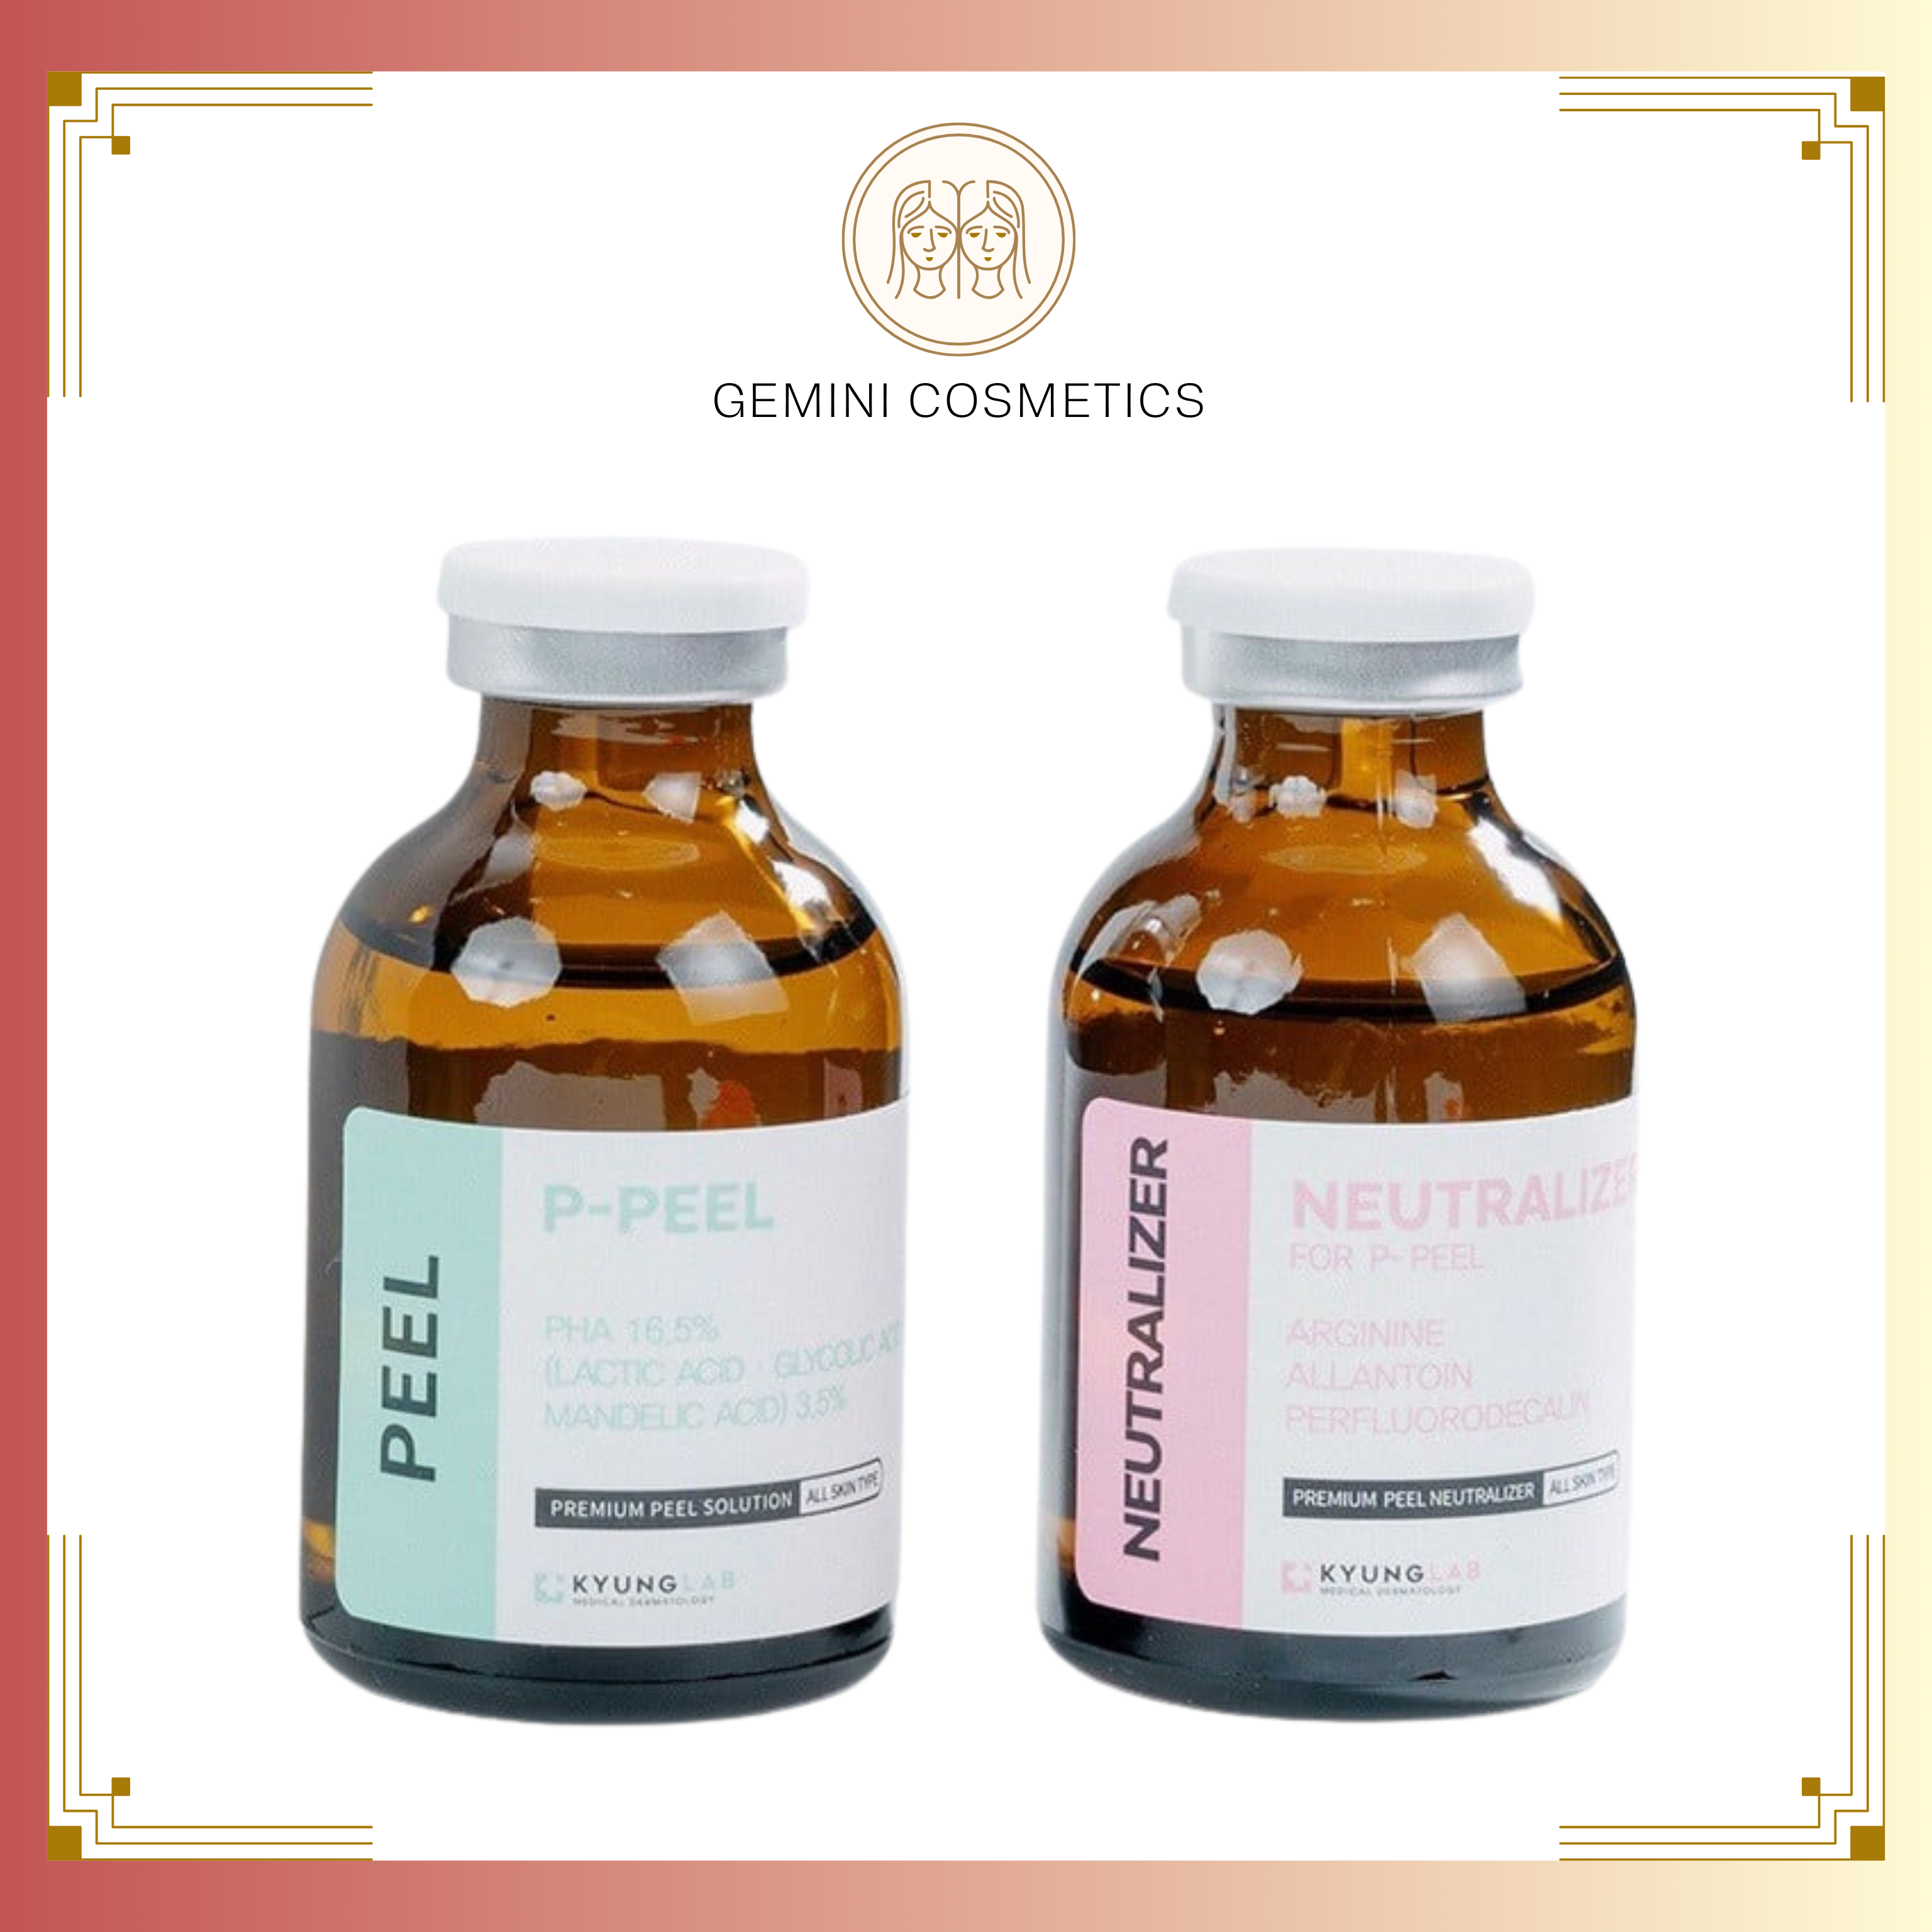 Tinh chất dưỡng da kyung lab P-Peel + Neutralizer giúp thay da làm đẹp da